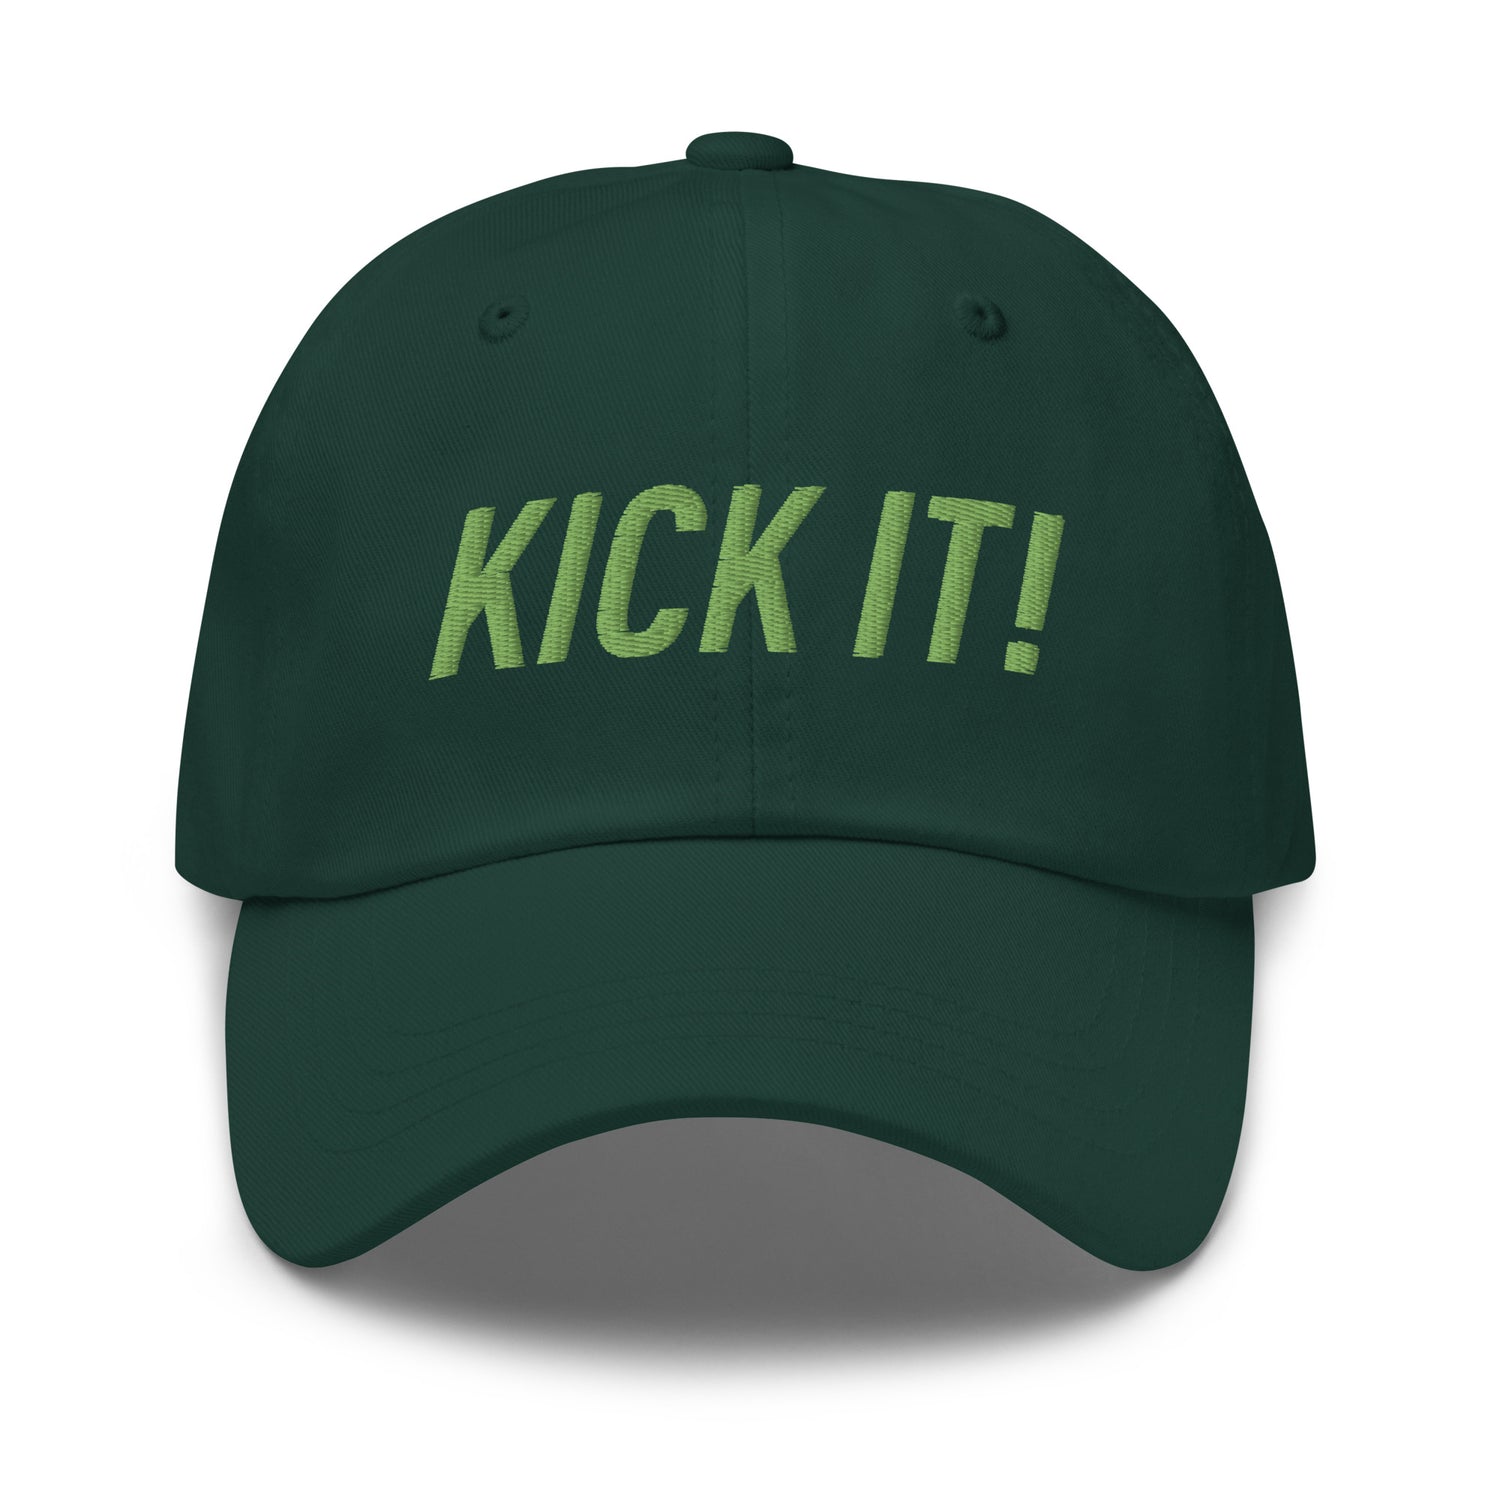 Kick It! Hats